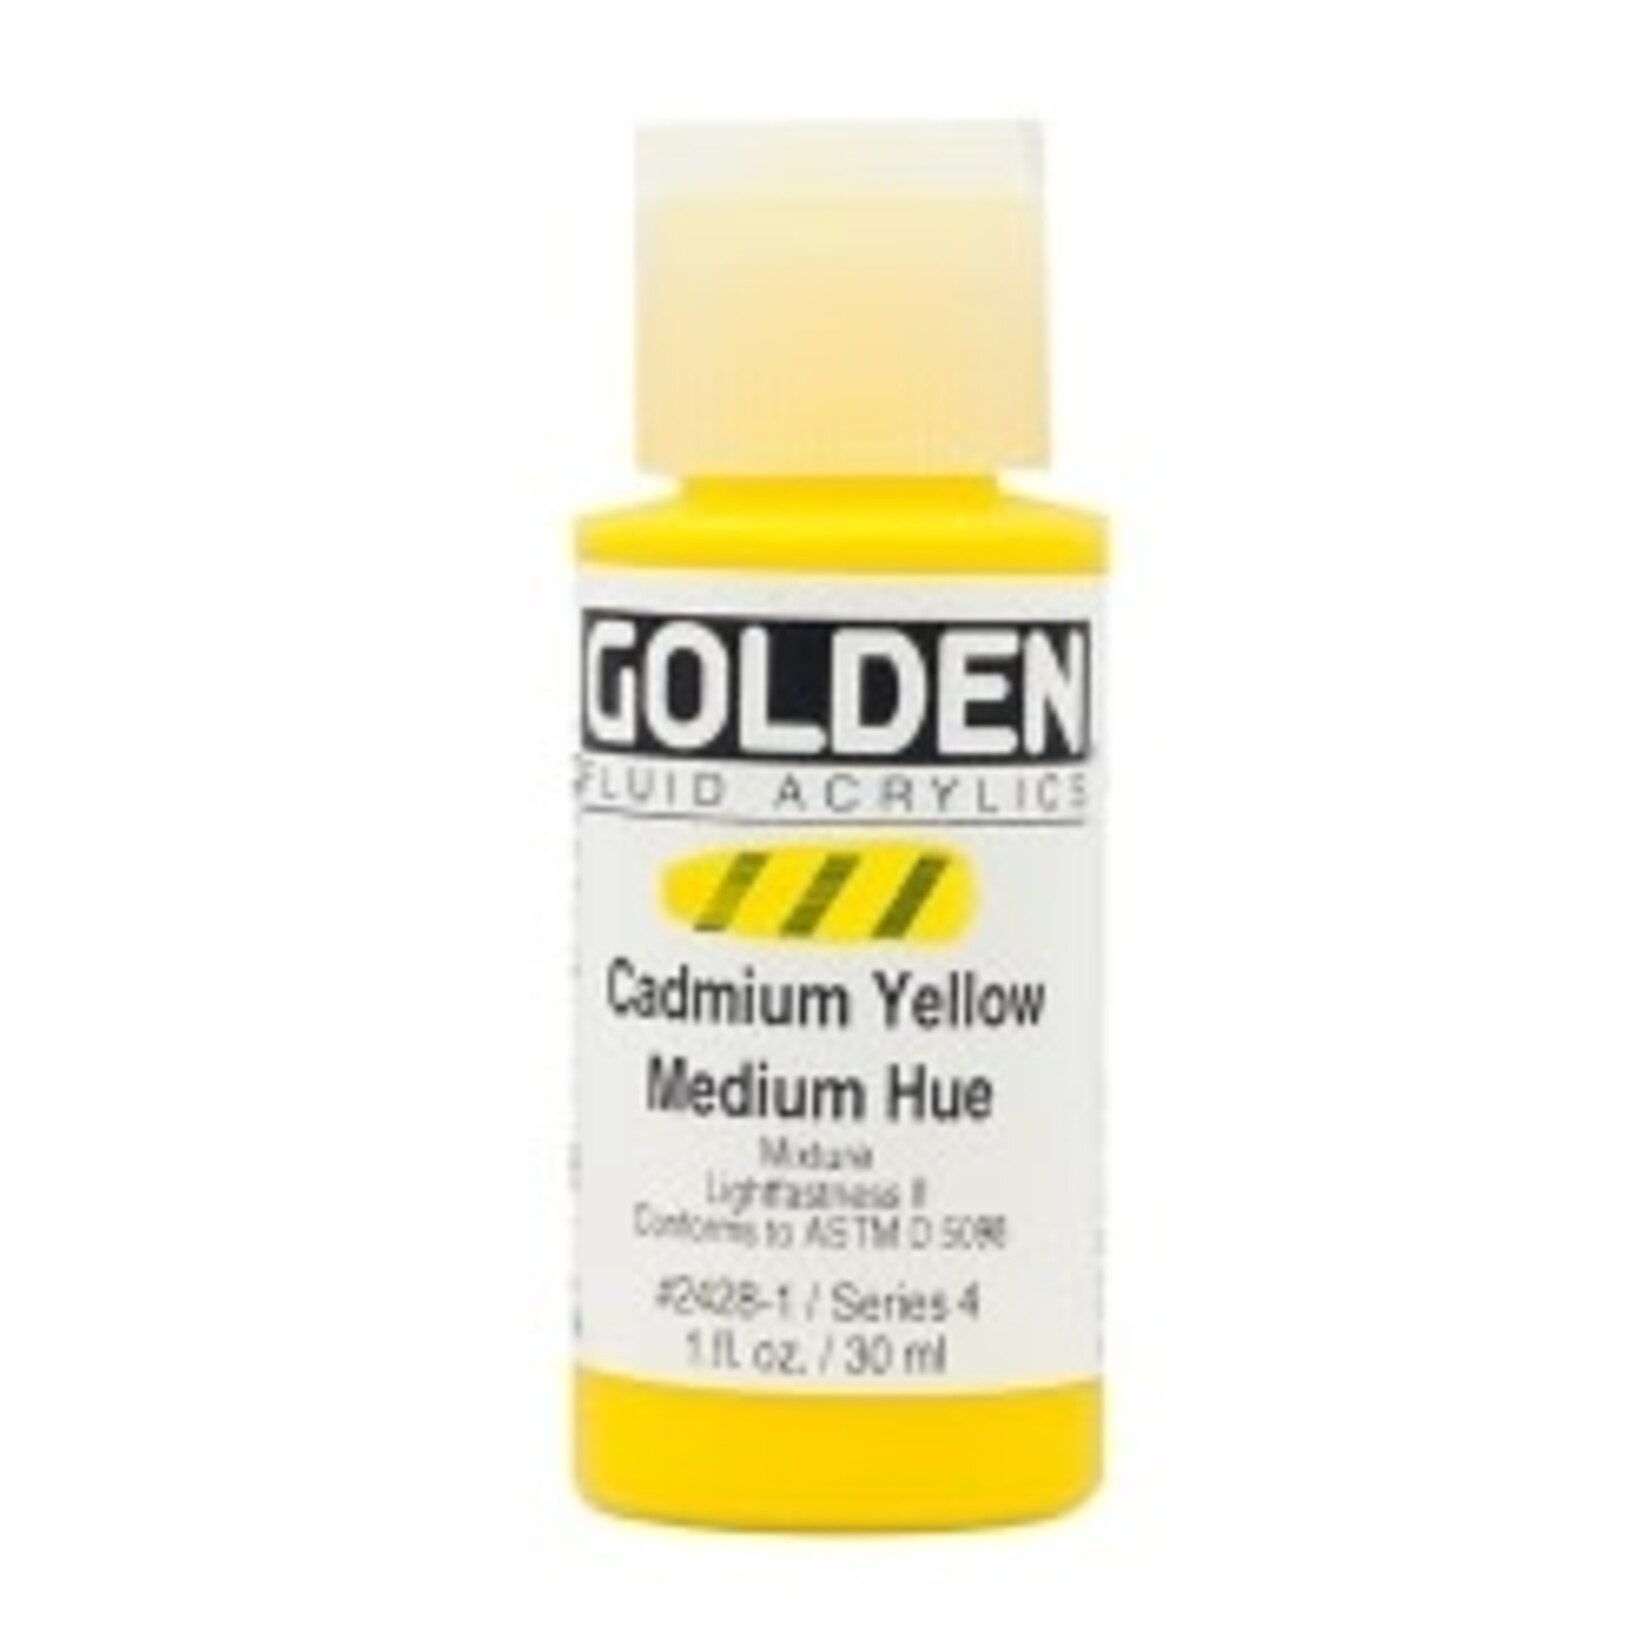 Golden Fluid Cadmium Yellow Medium Hue 1 oz Series 4